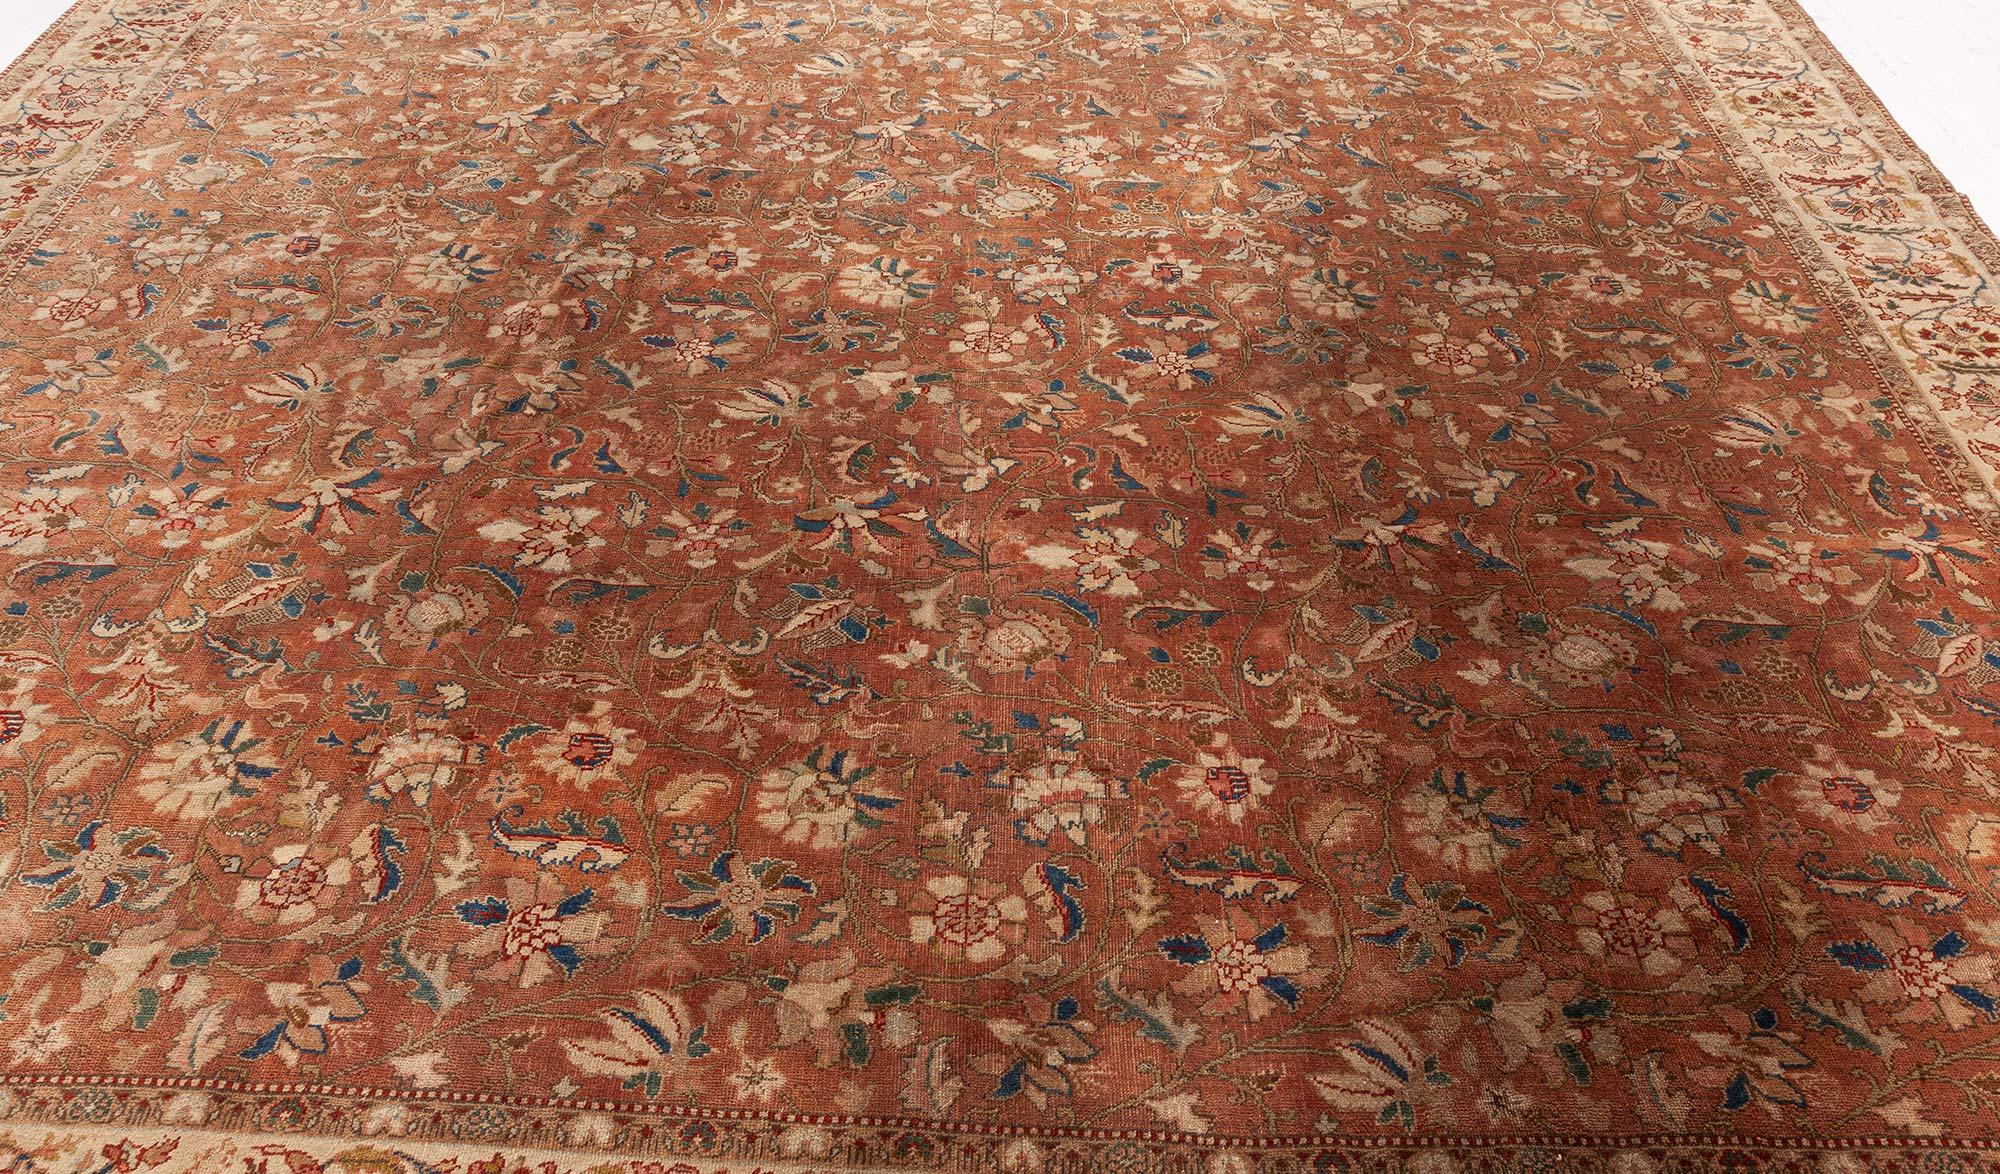 Authentic Persian Tabriz brown botanic handmade wool rug
Size: 11'5